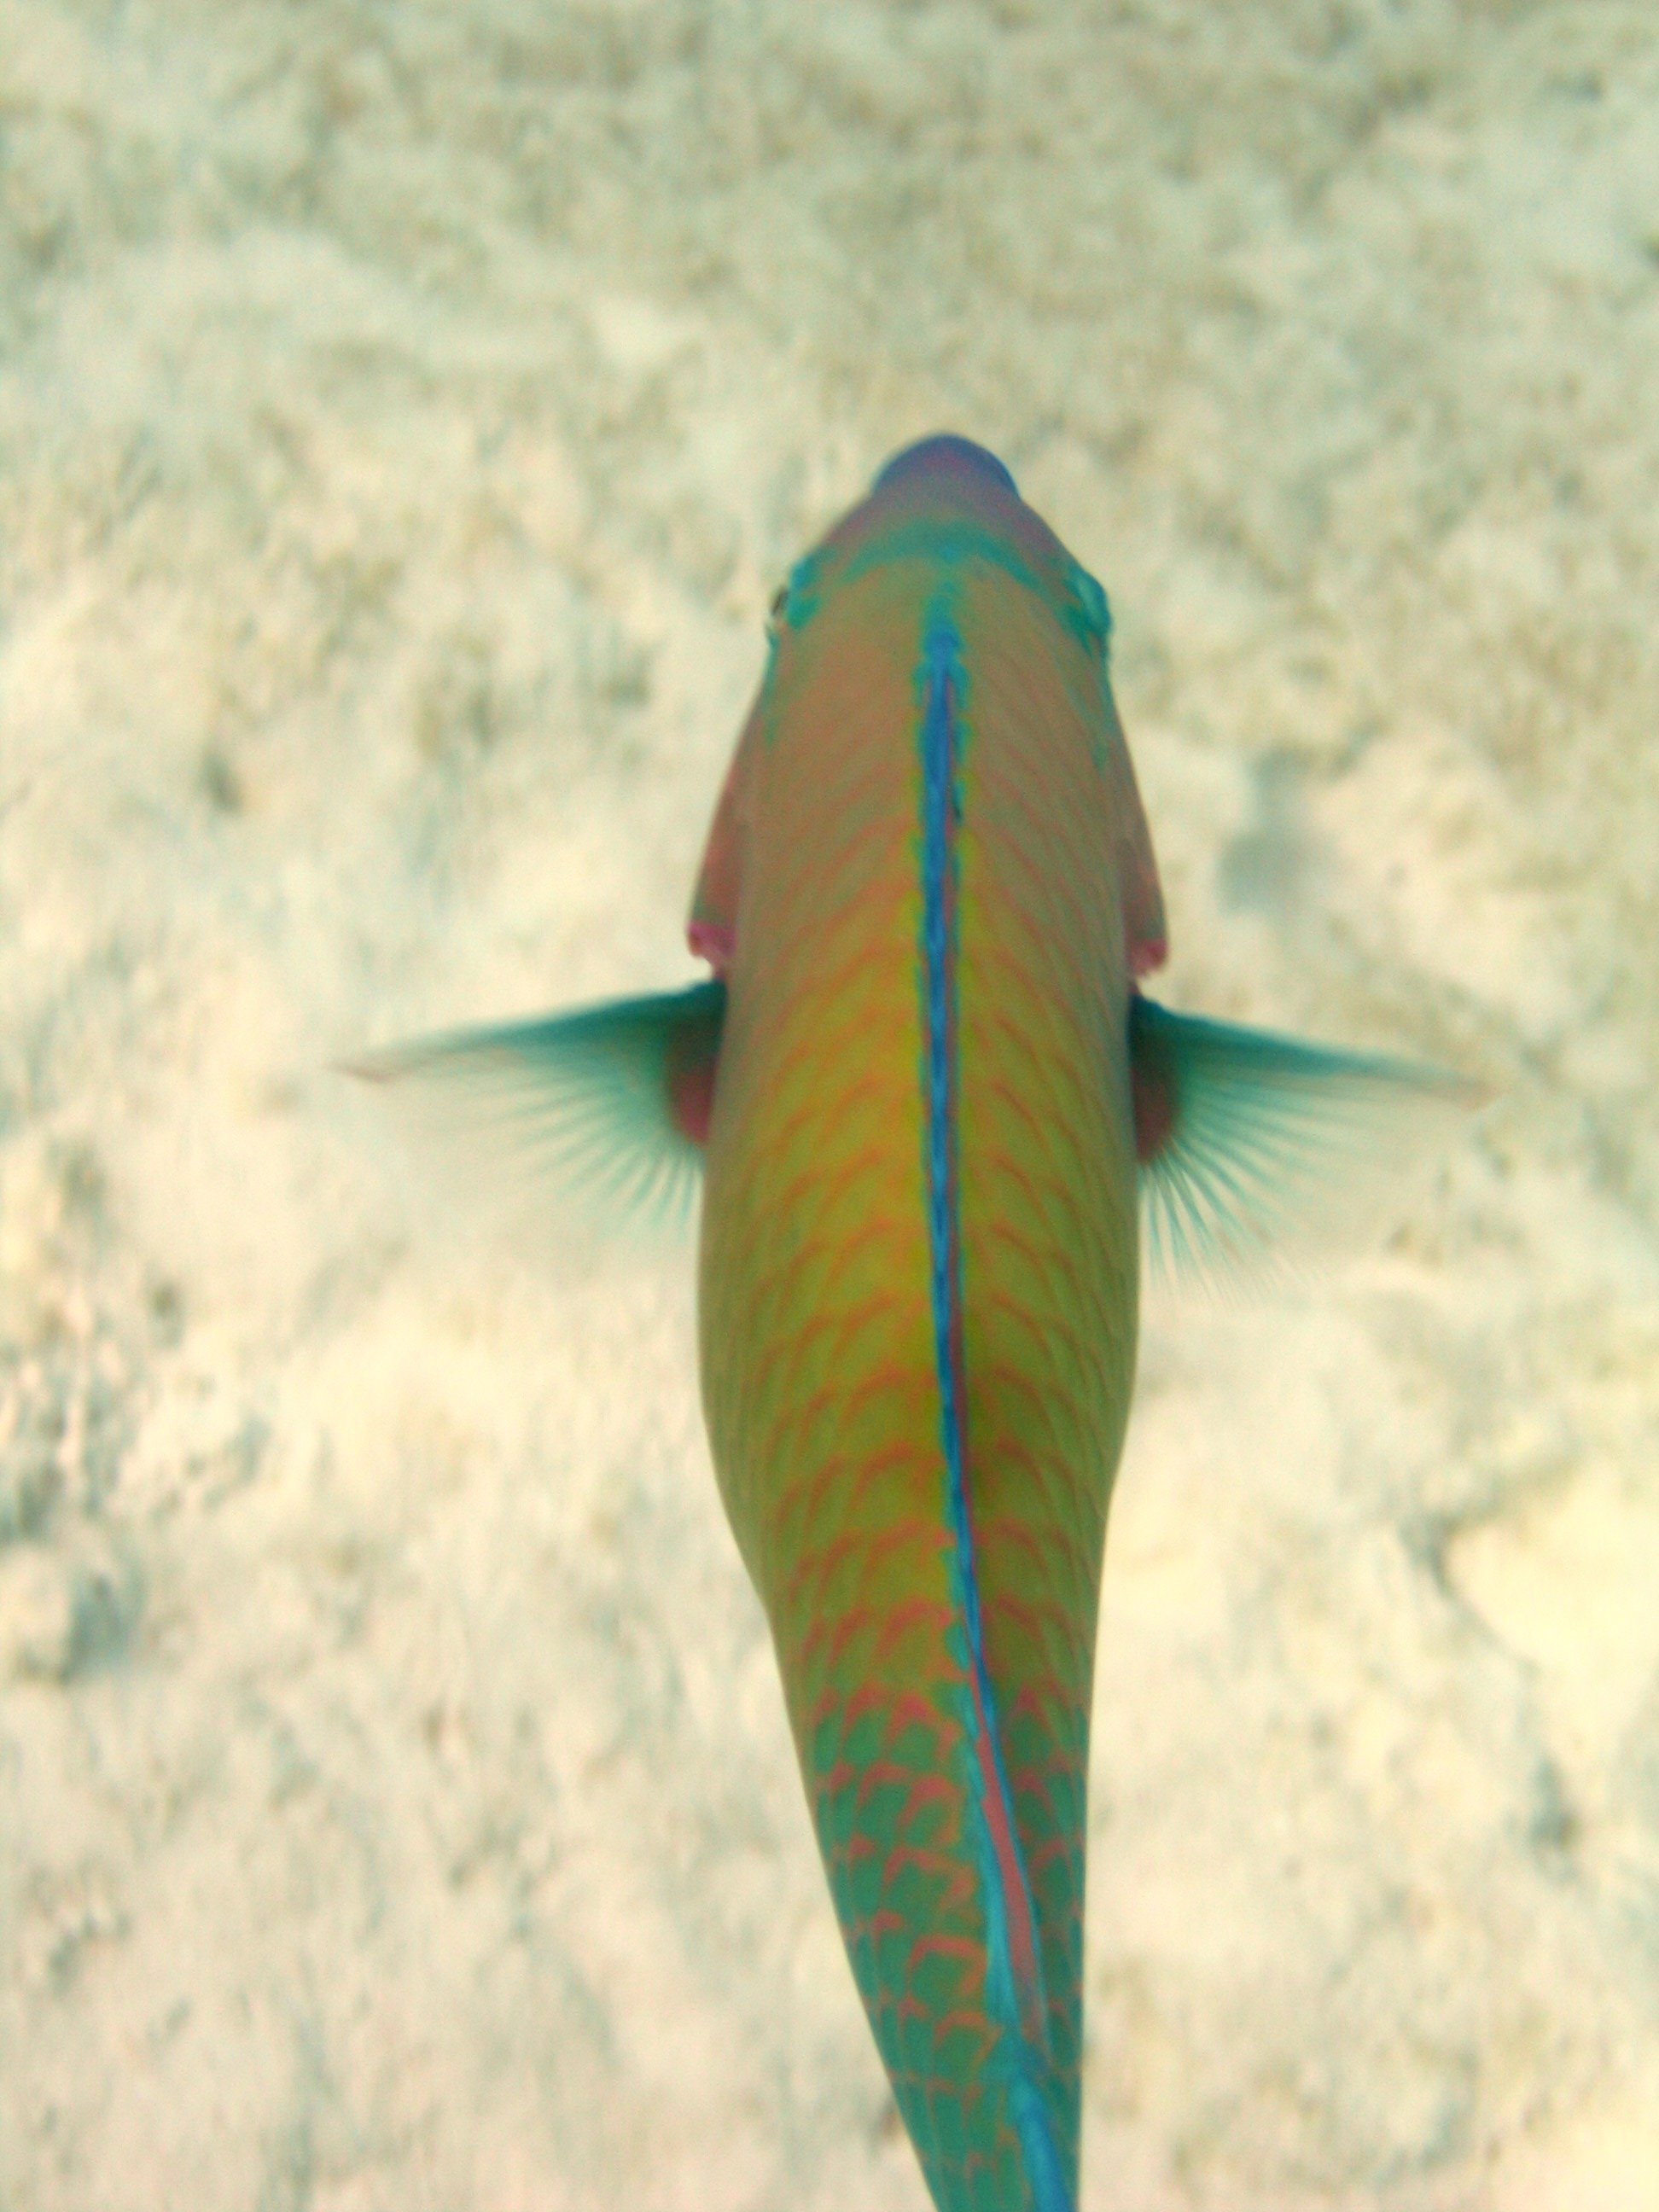 Bullethead parrotfish at Ypao Beach, Guam.